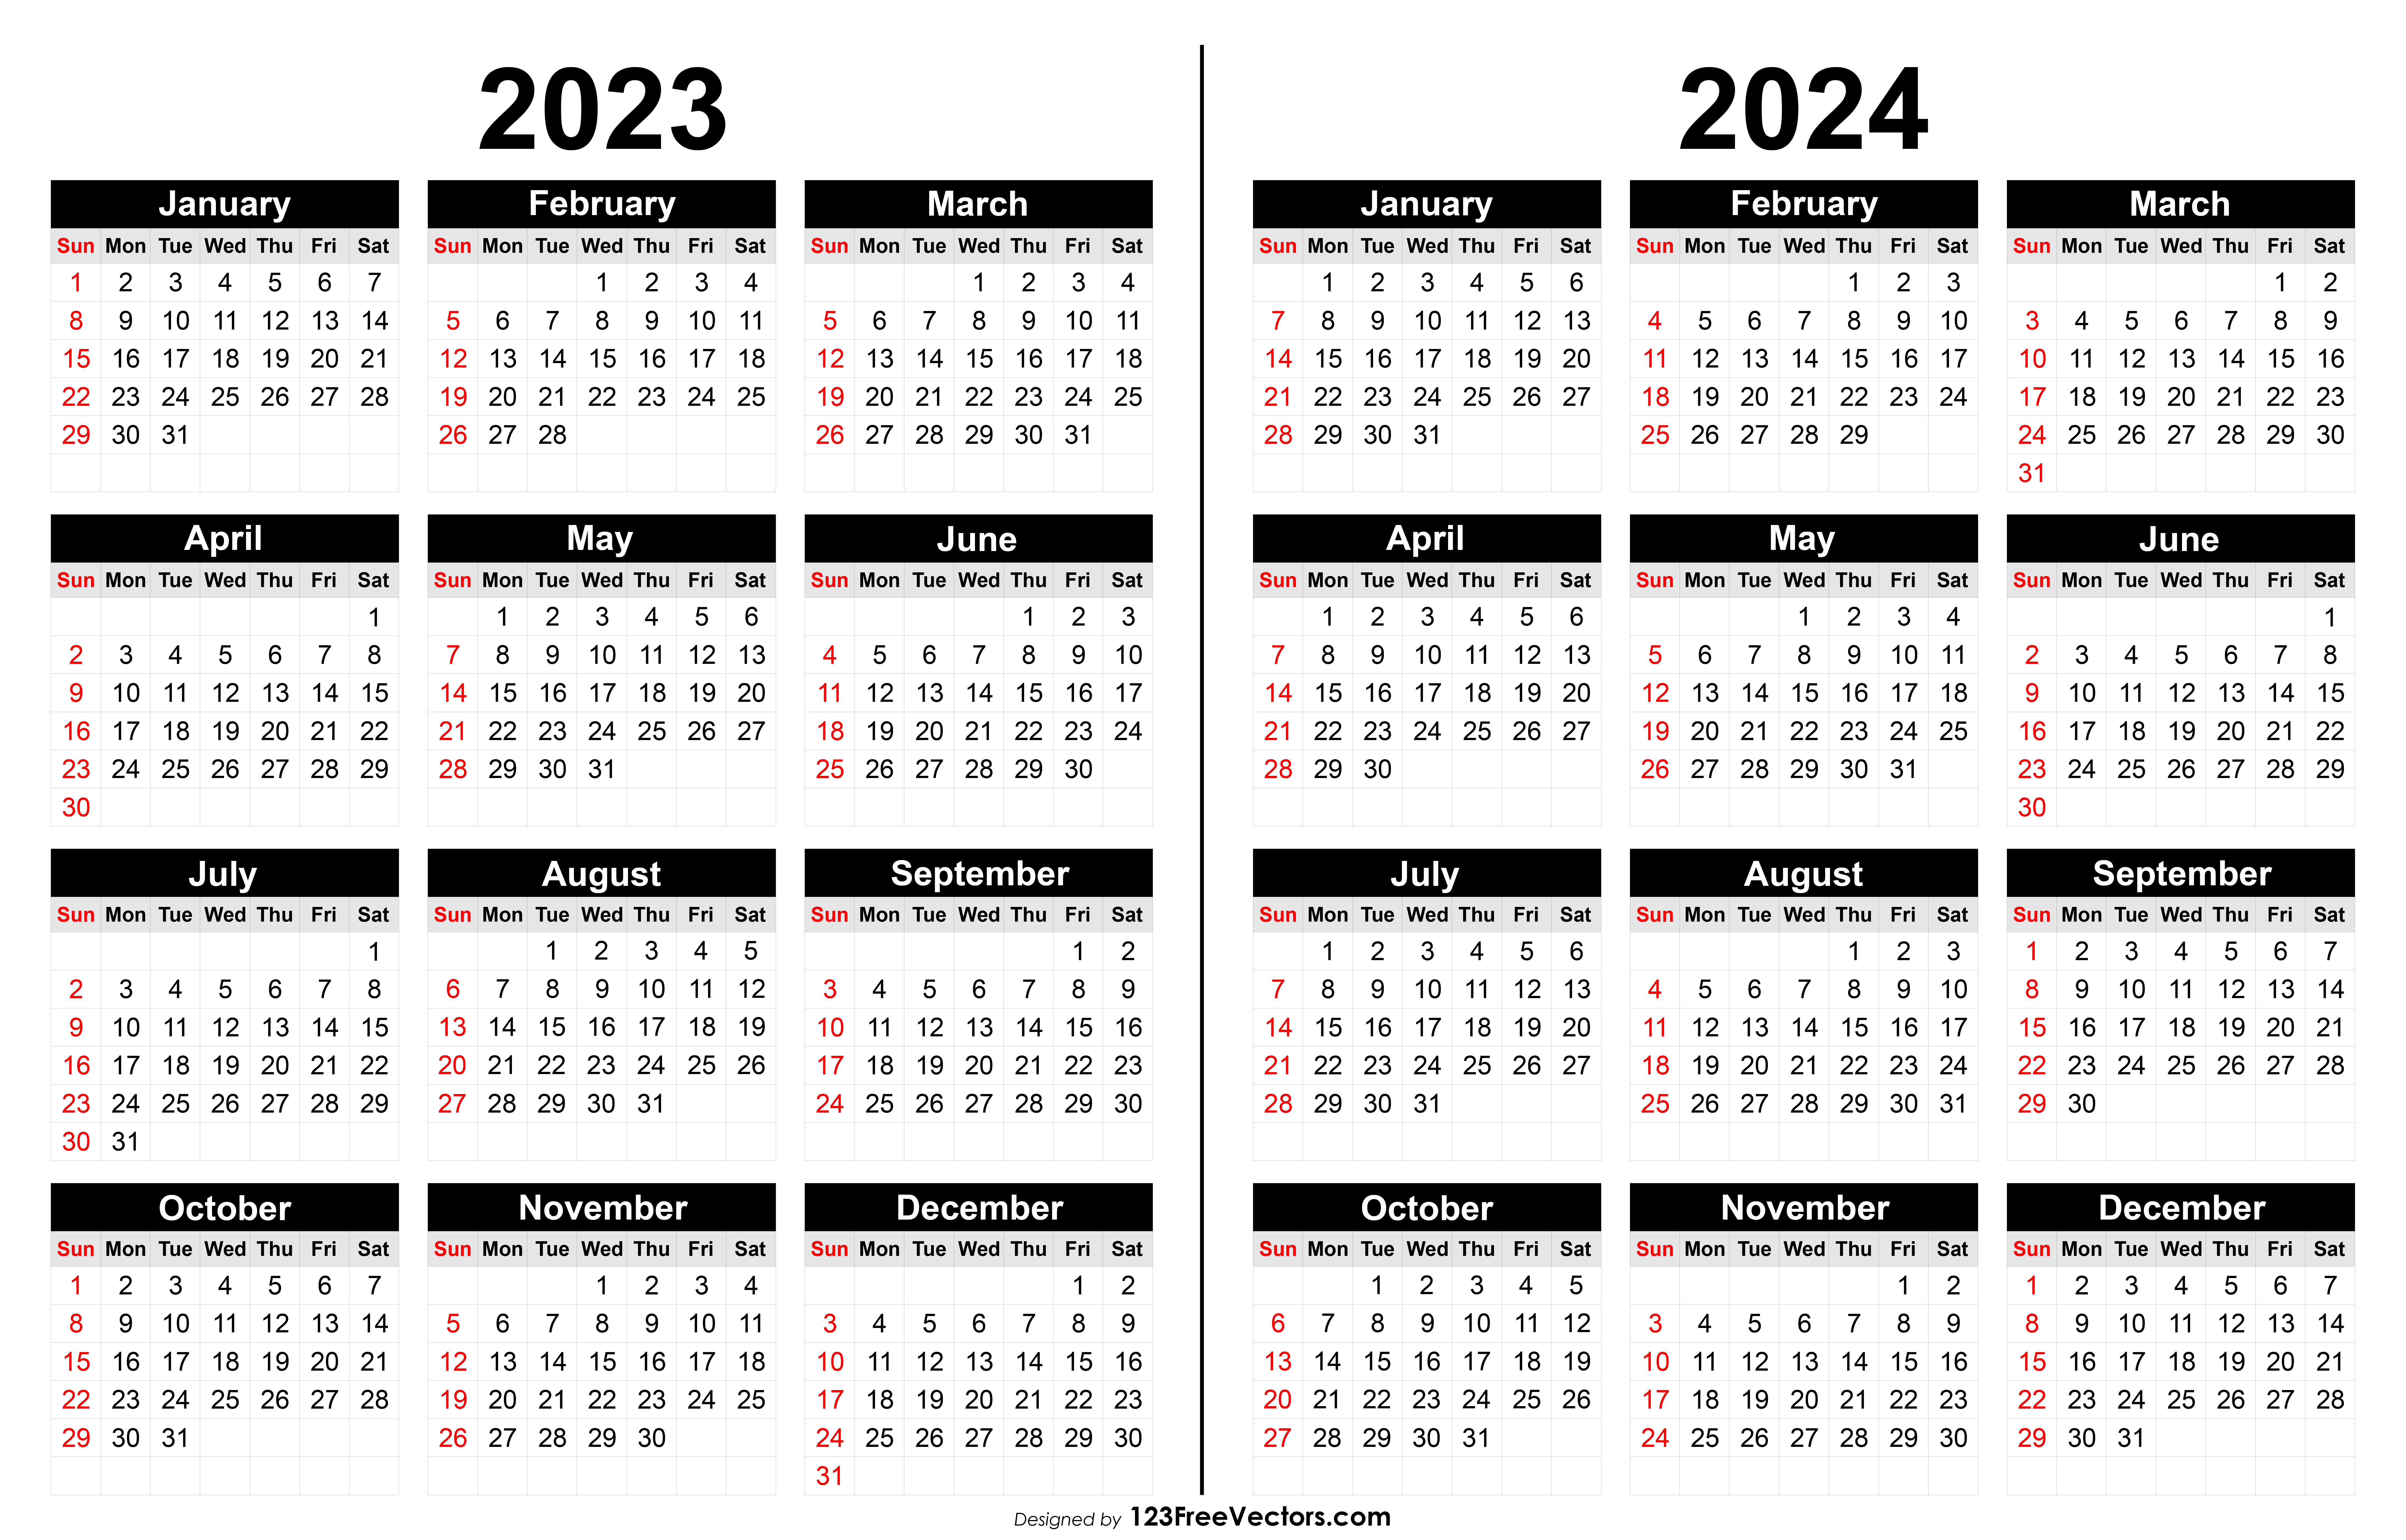 Free 2023 And 2024 Calendar Printable | Yearly Calendar 2023 And 2024 Printable